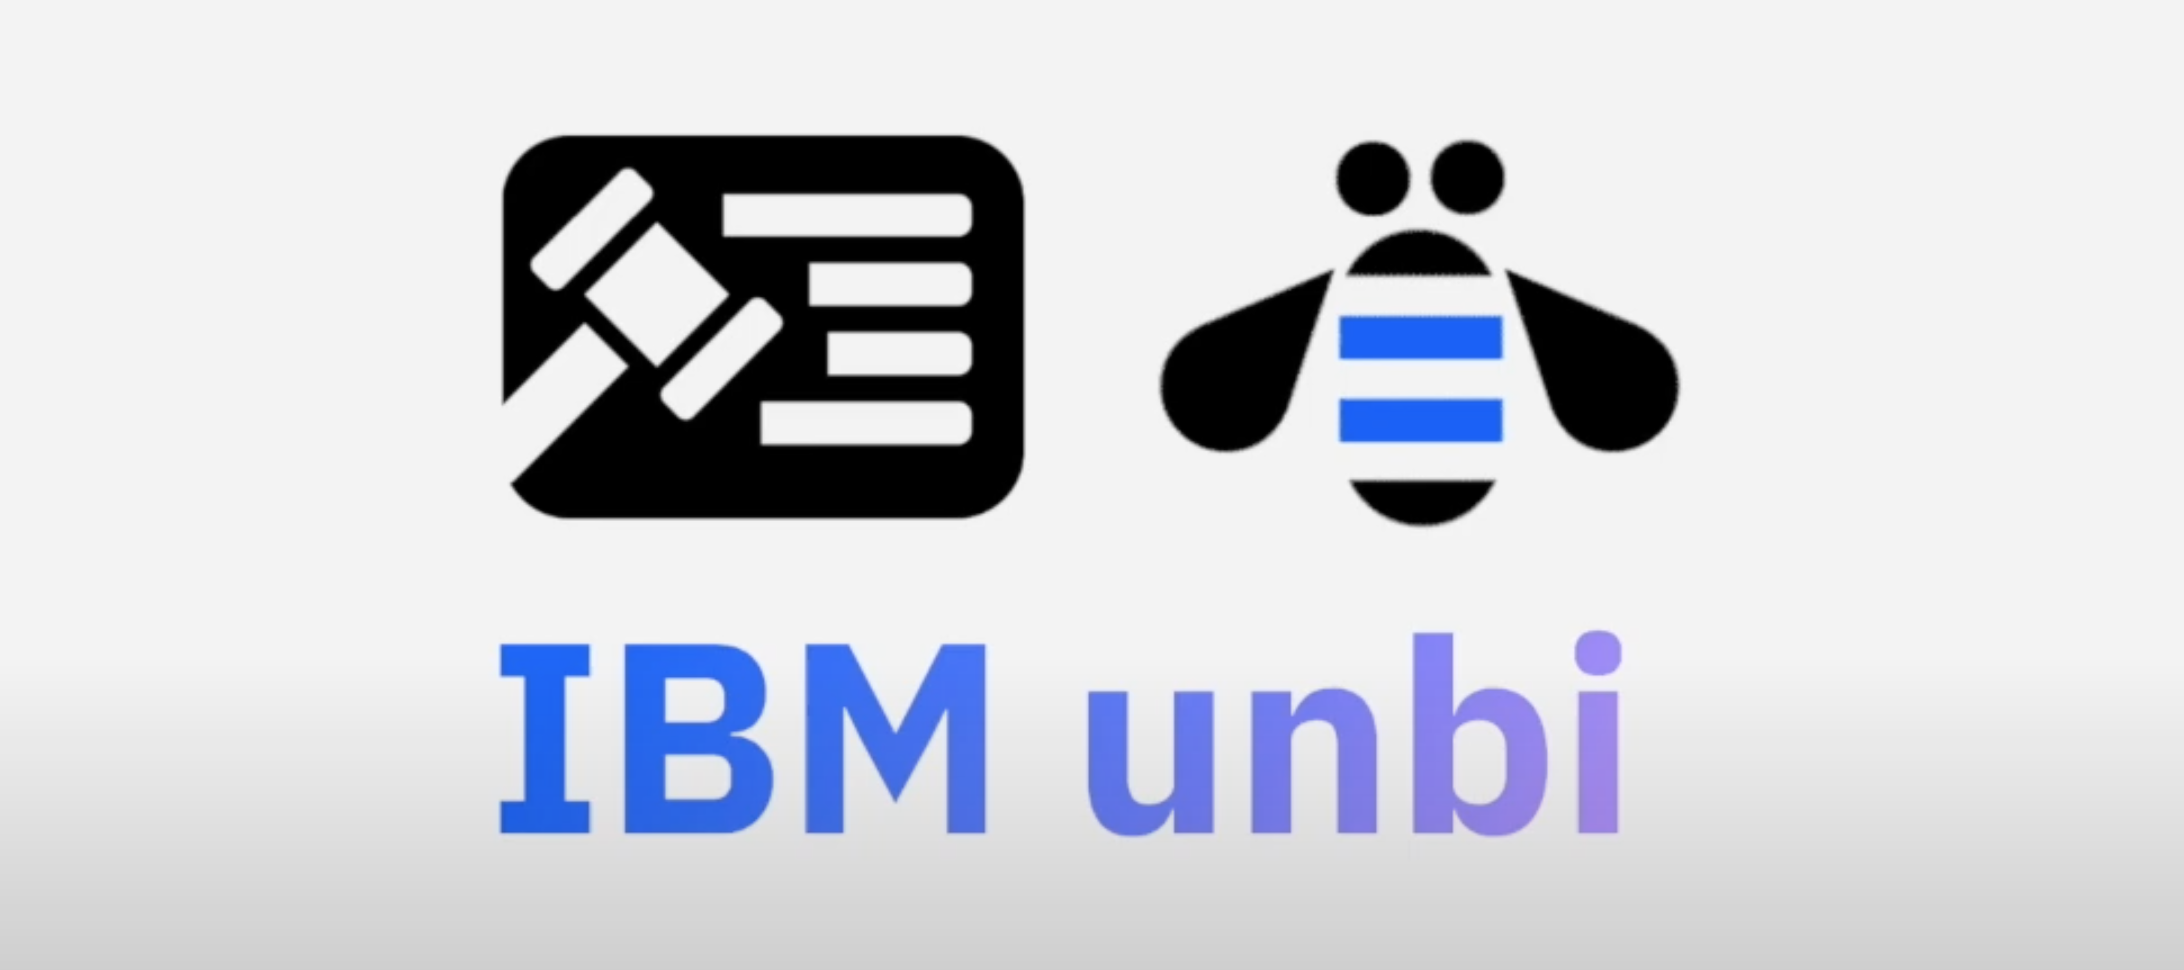 UNBI logo